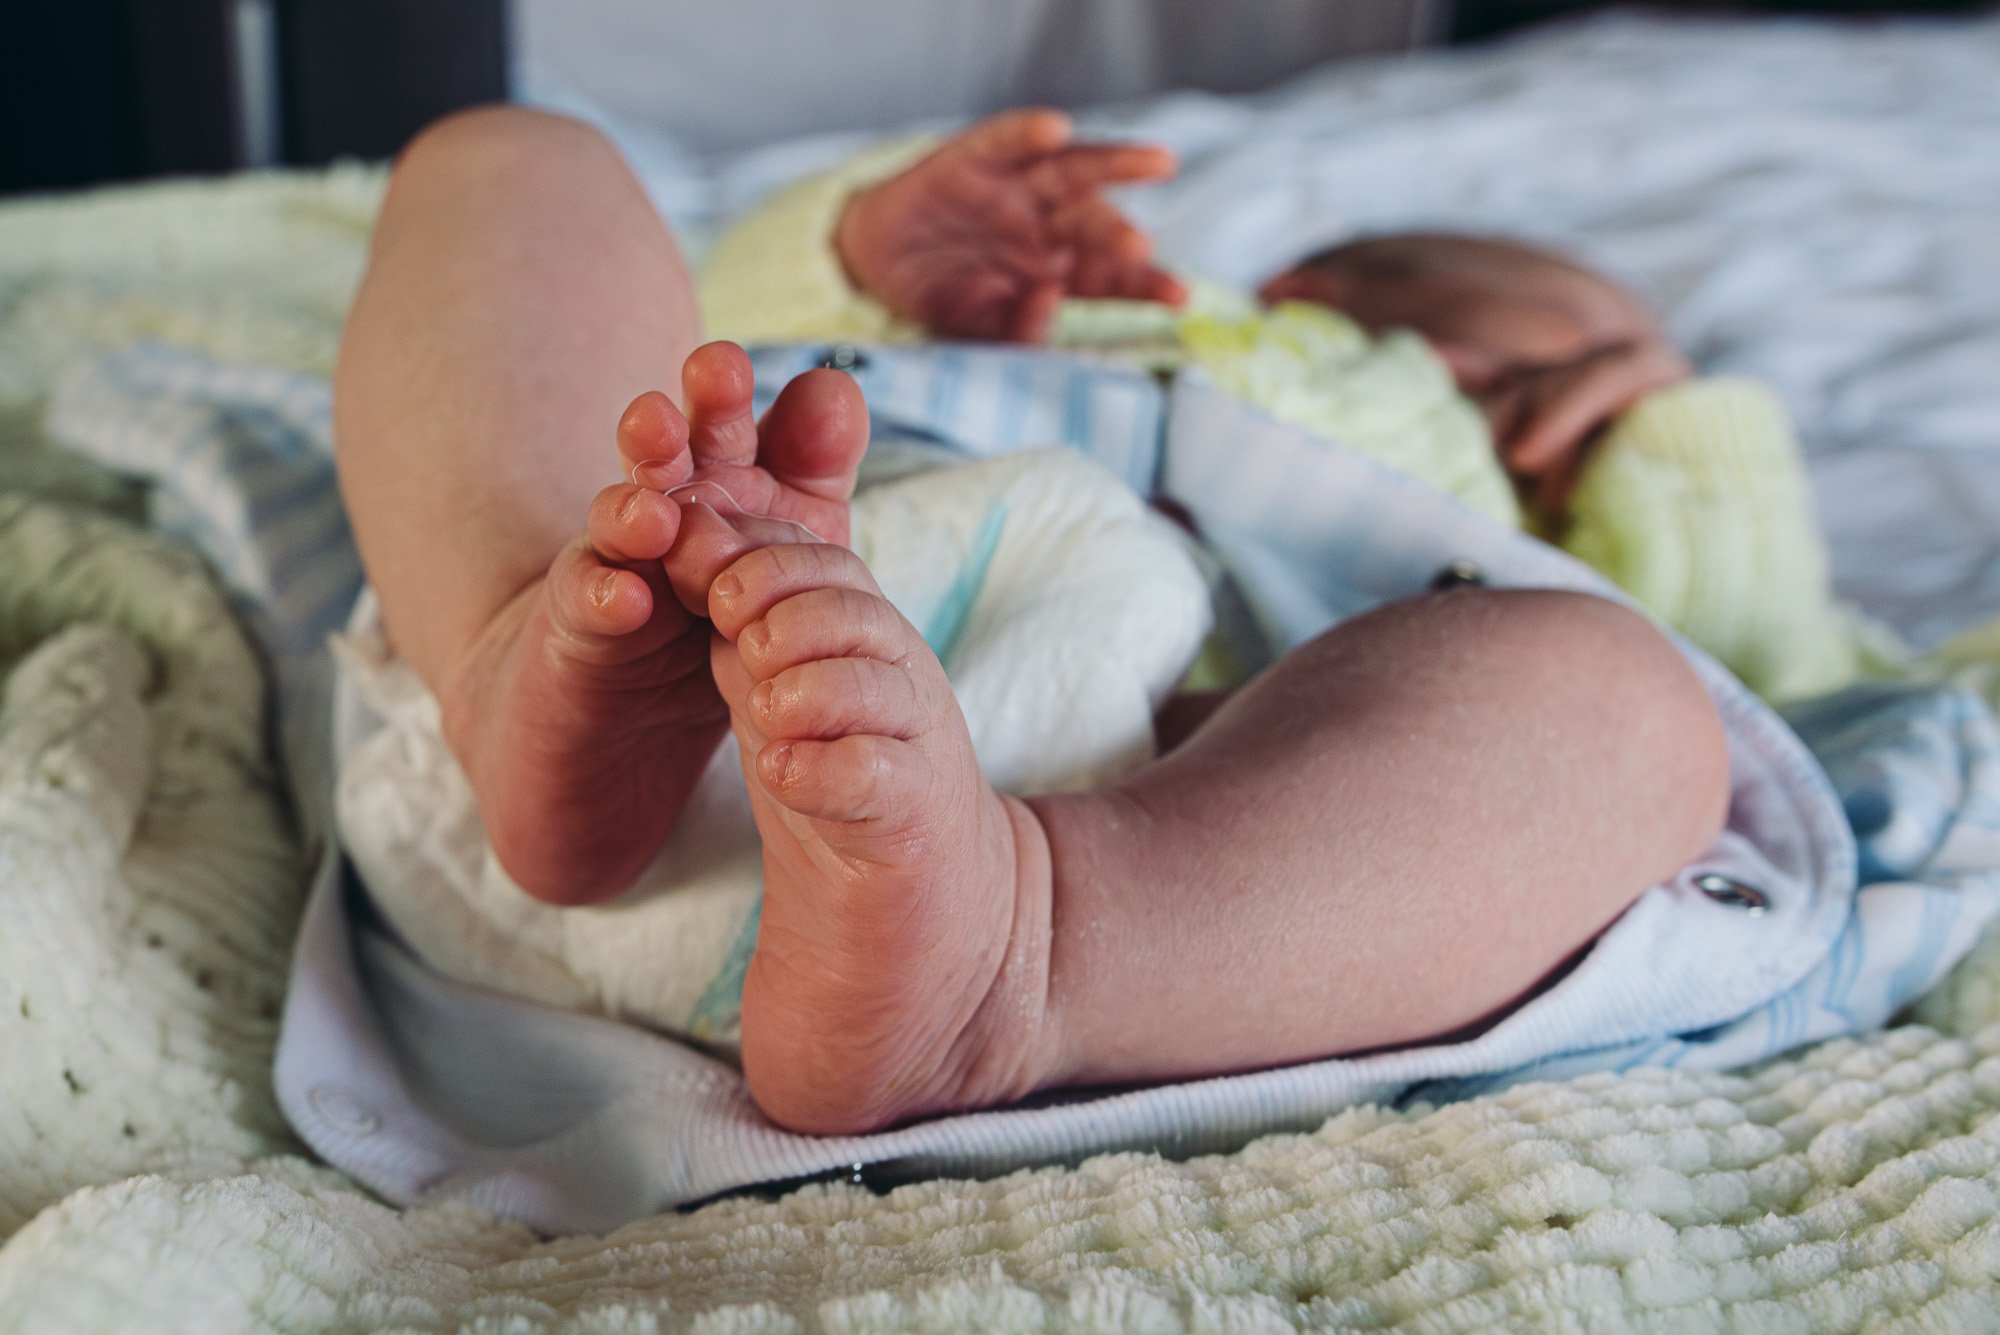 newborn-baby-tiny-feet-detailed-shot-newborn-photography-at-home-unposed-hassocks-sussex.jpg